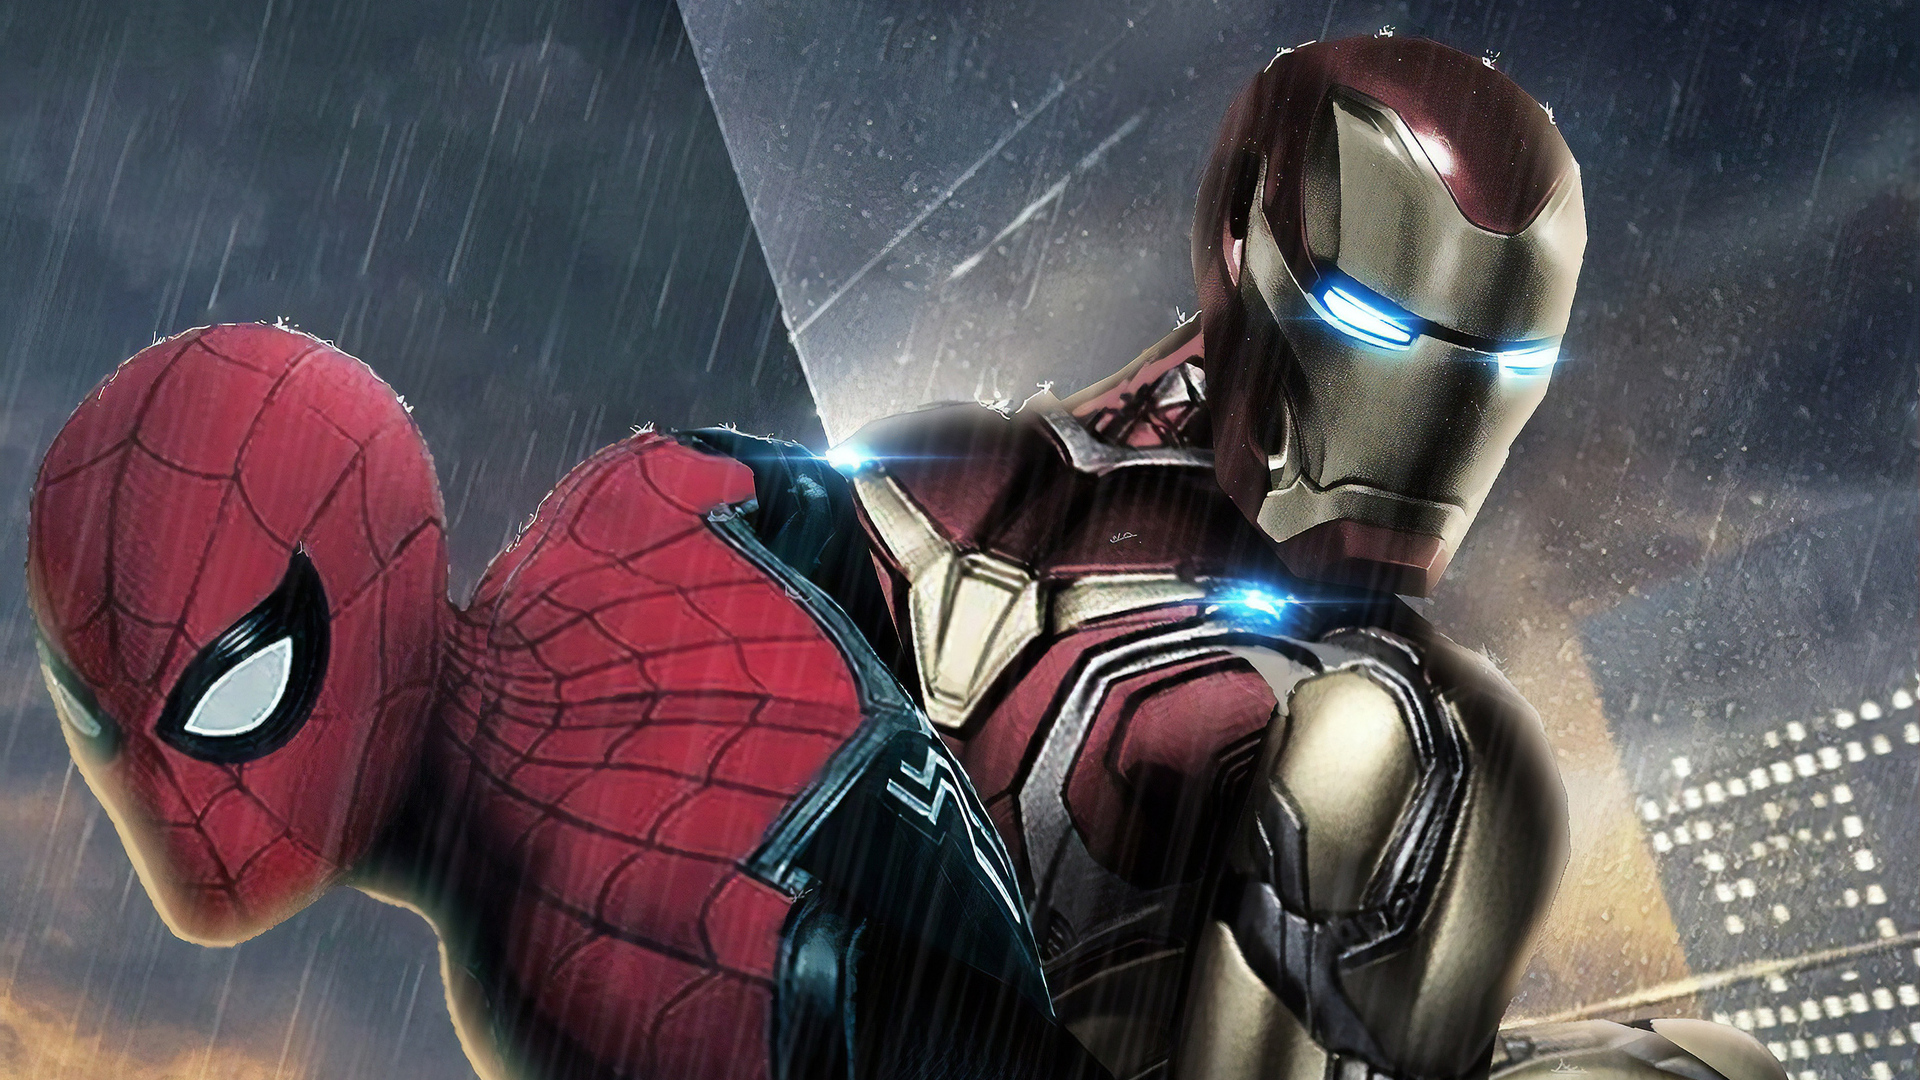 Iron-Man and Spider-Man